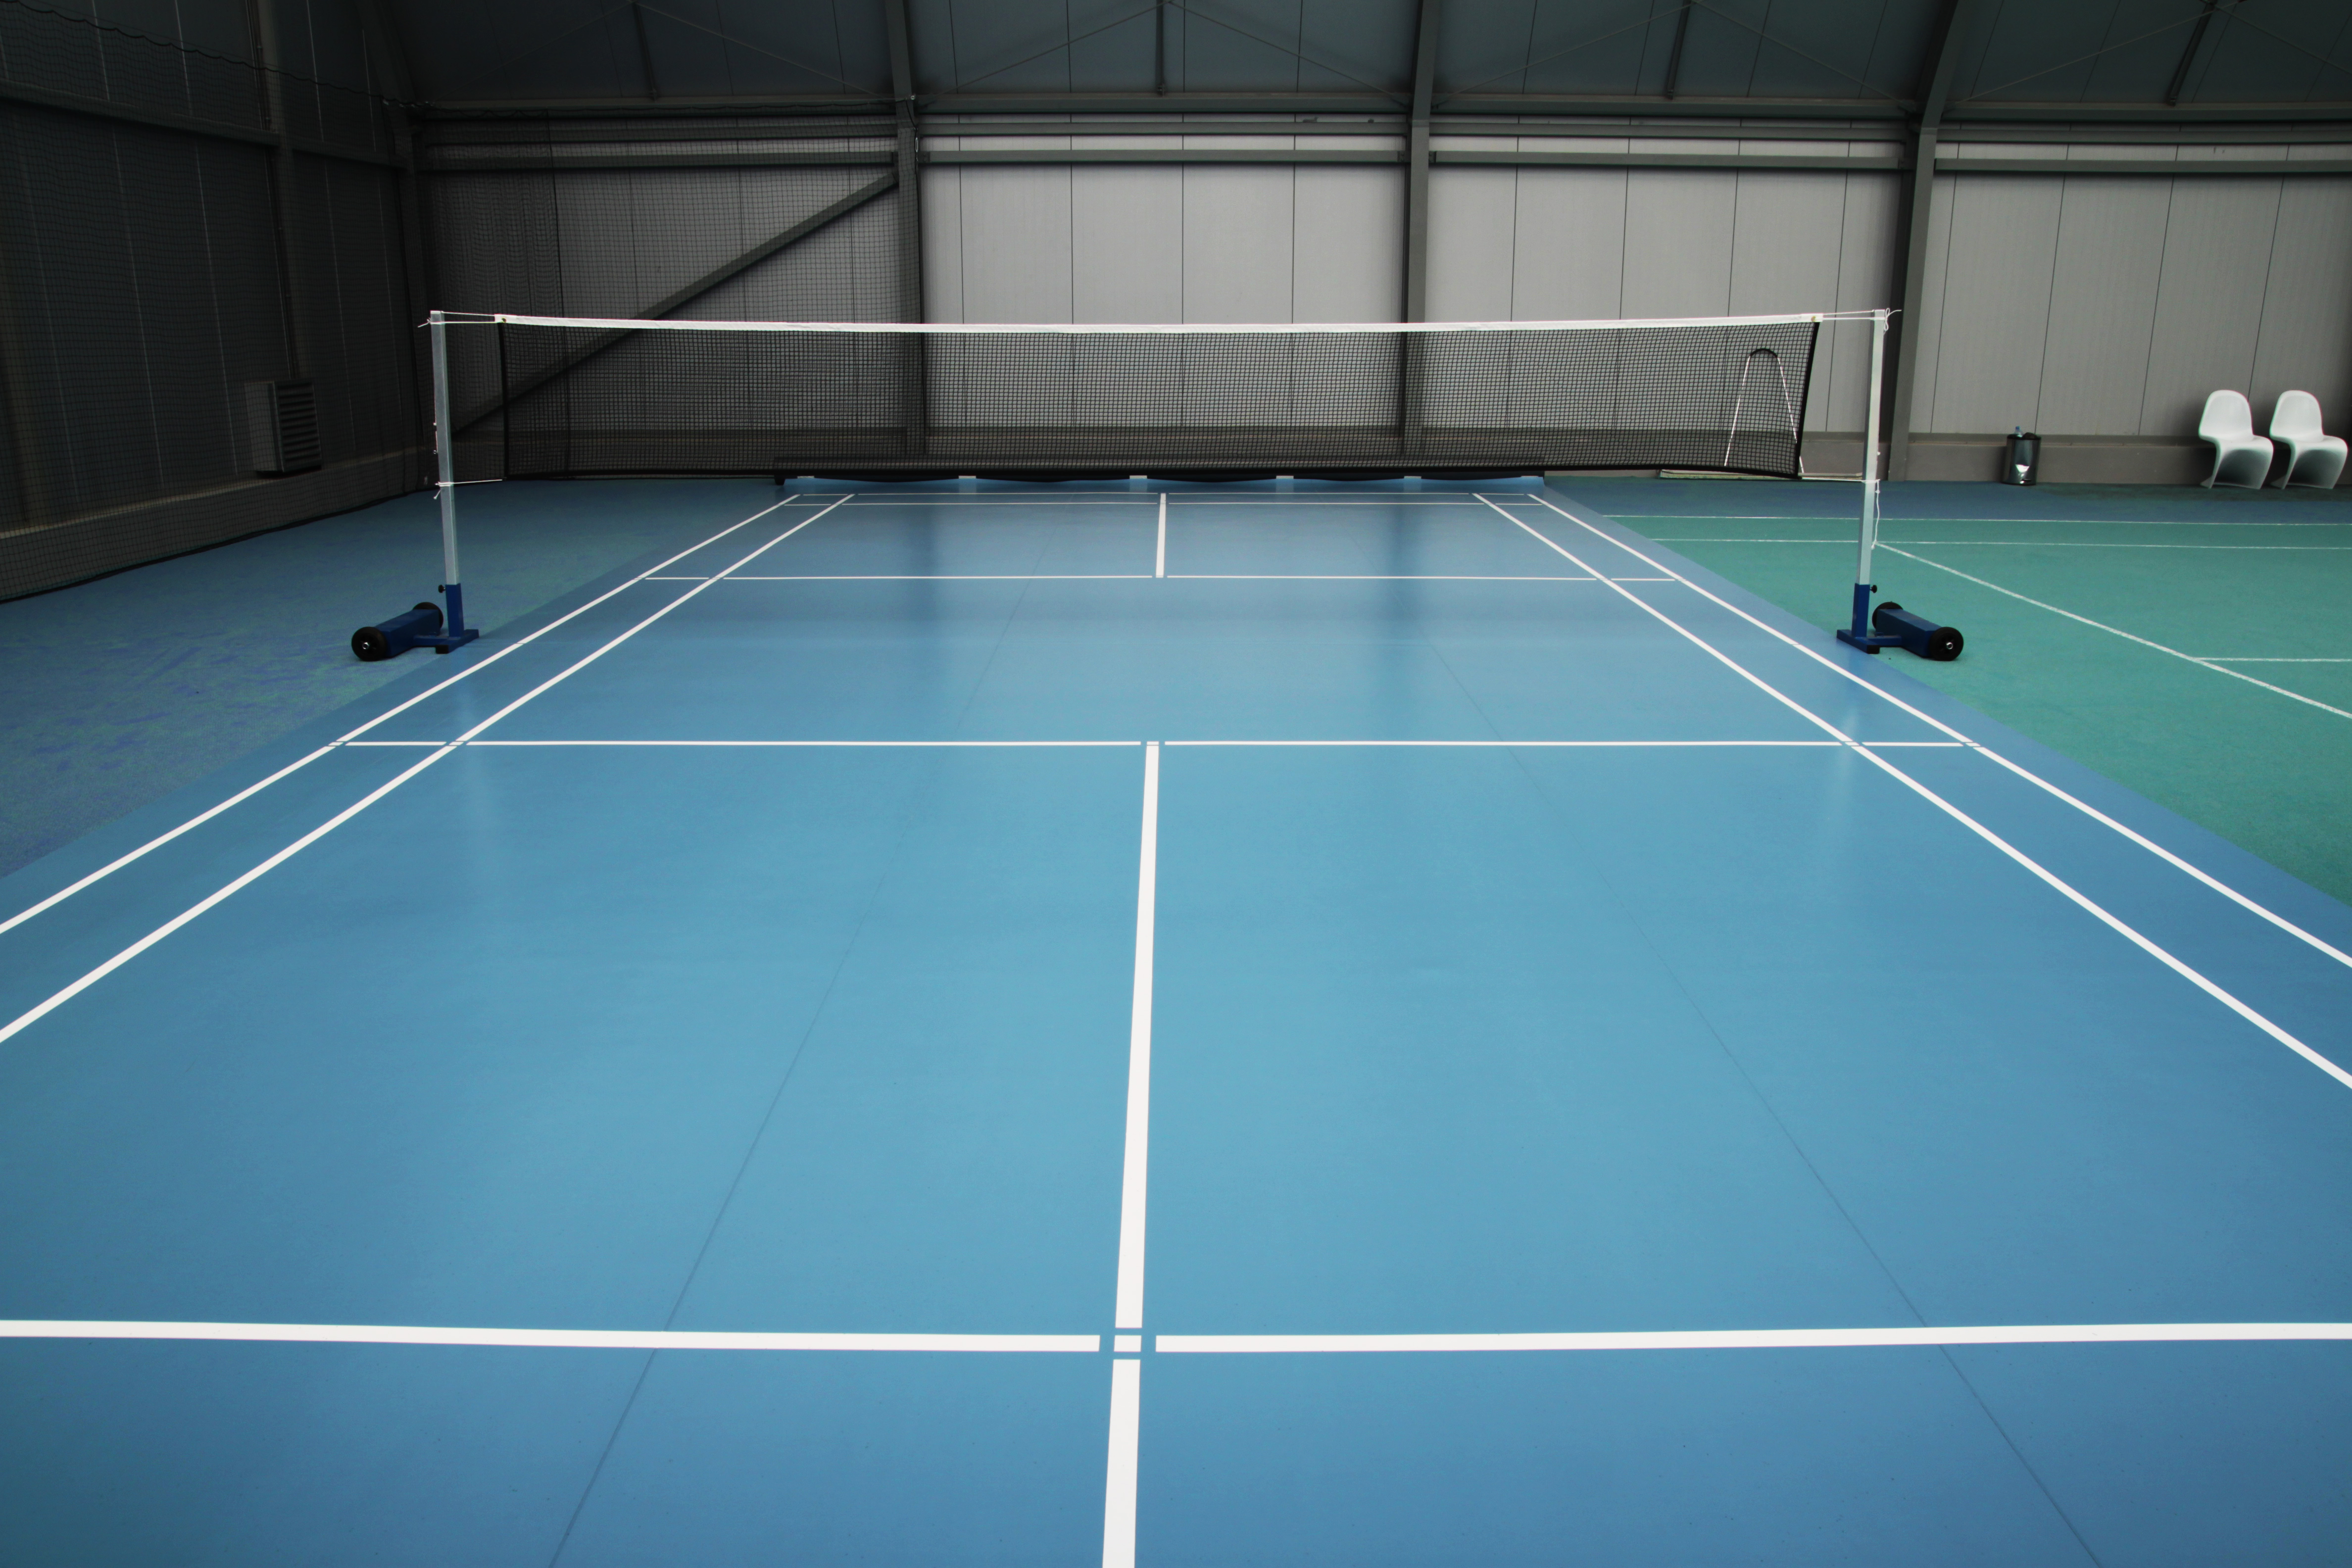 Badminton surfaces